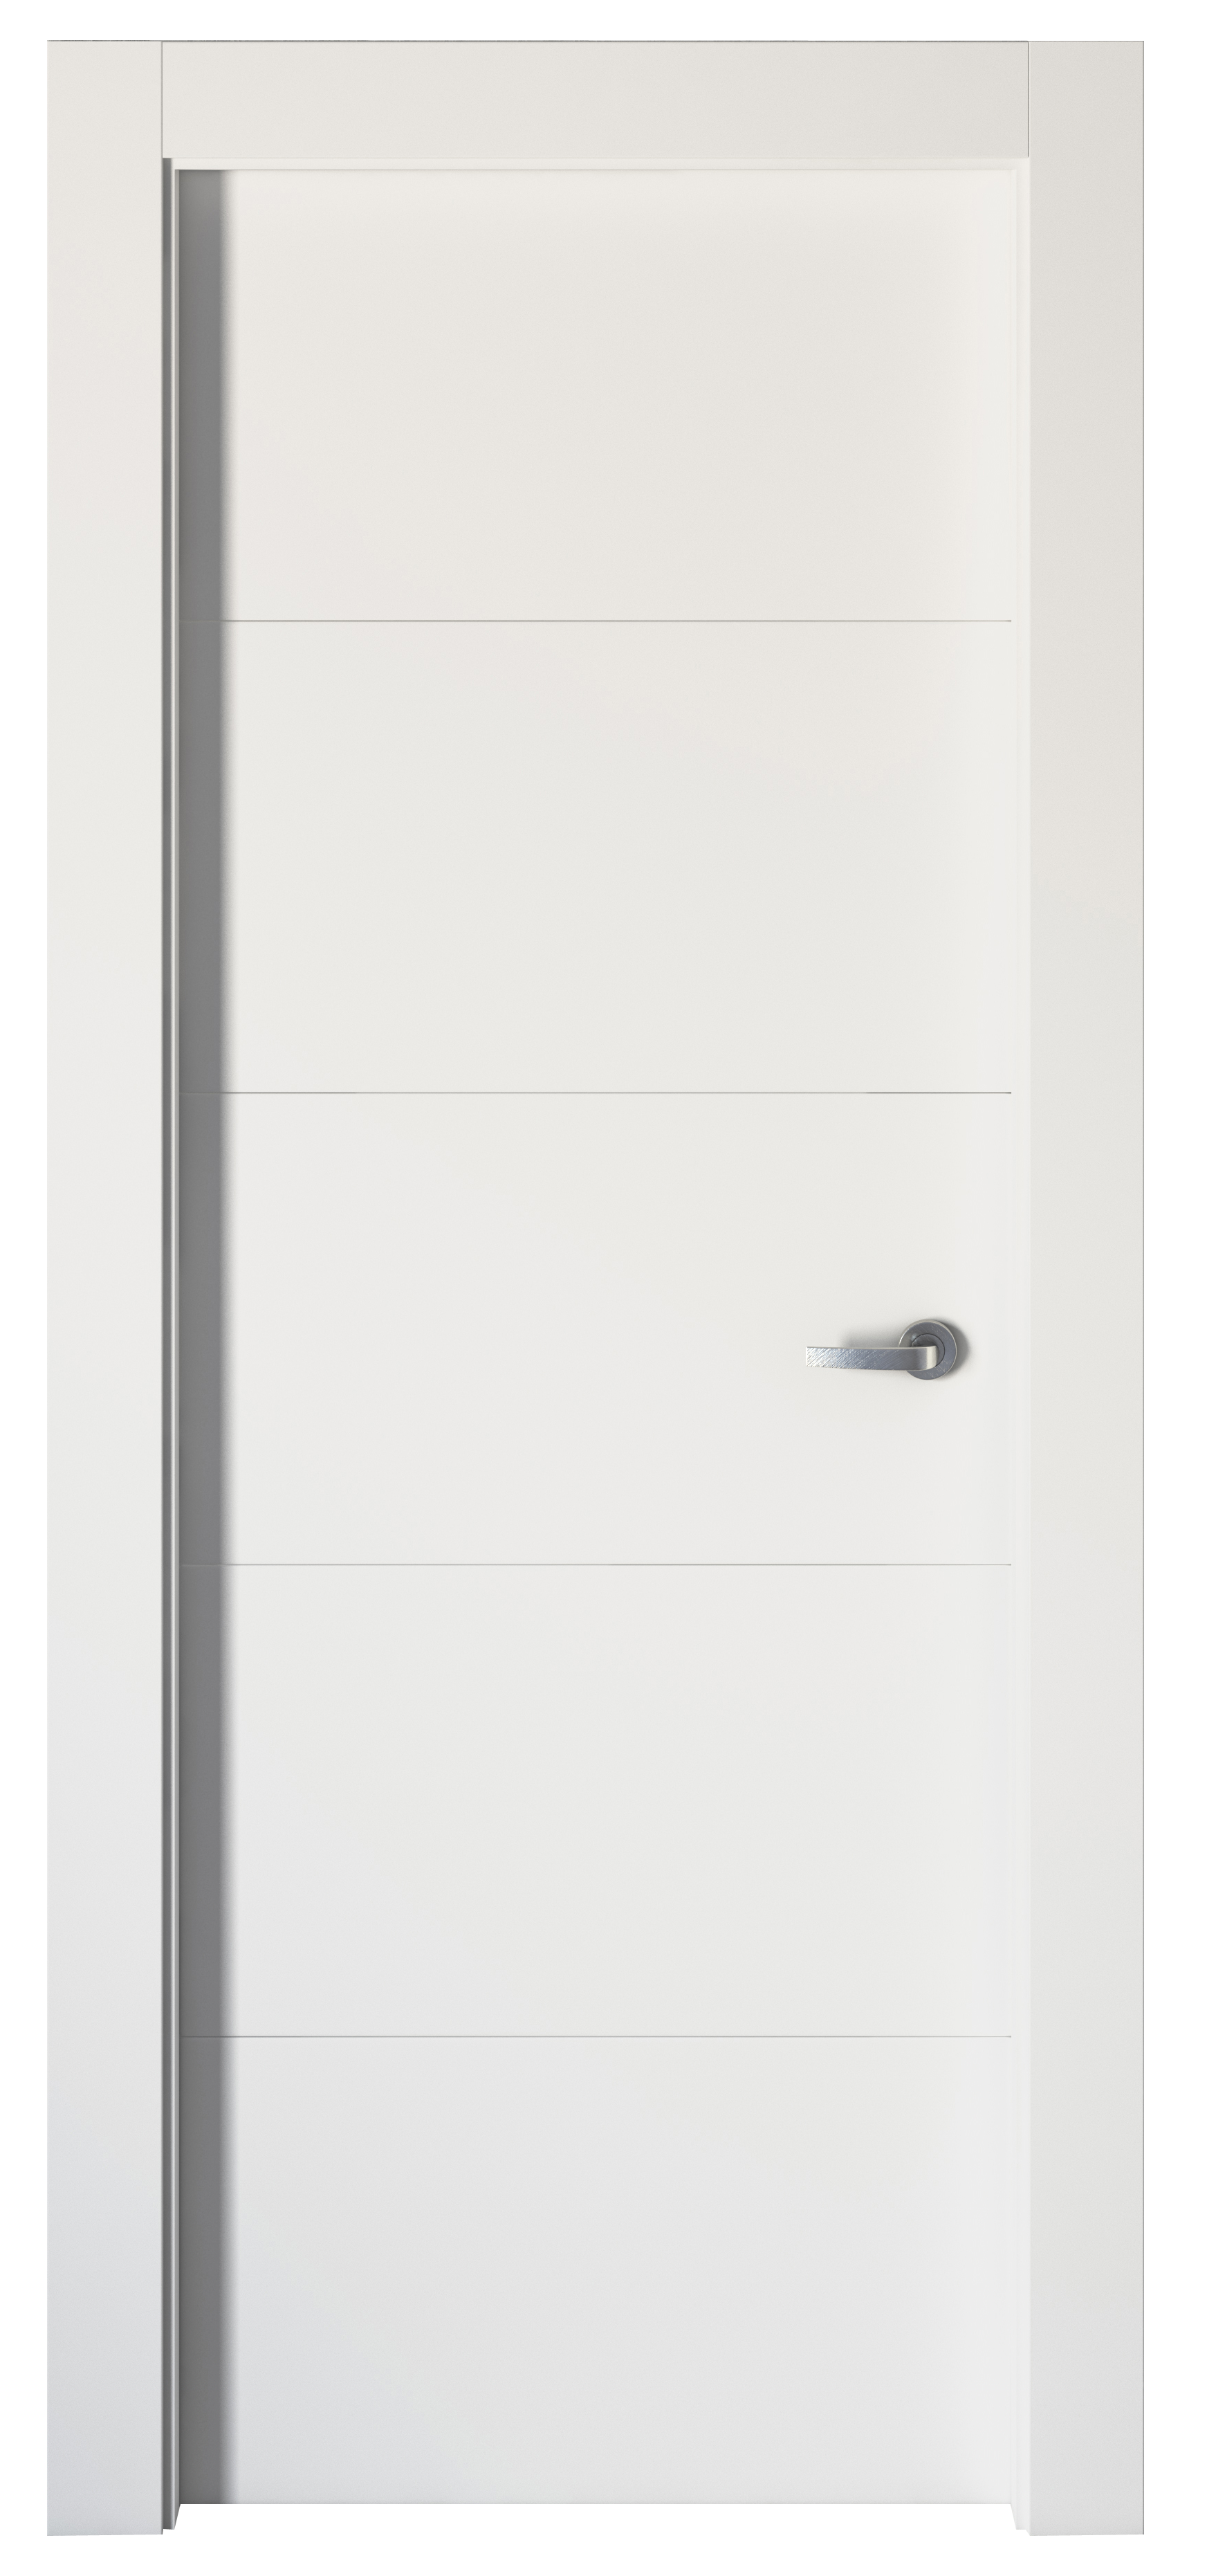 Puerta abatible en block lucerna blanca de apertura izquierda de 72.5 cm